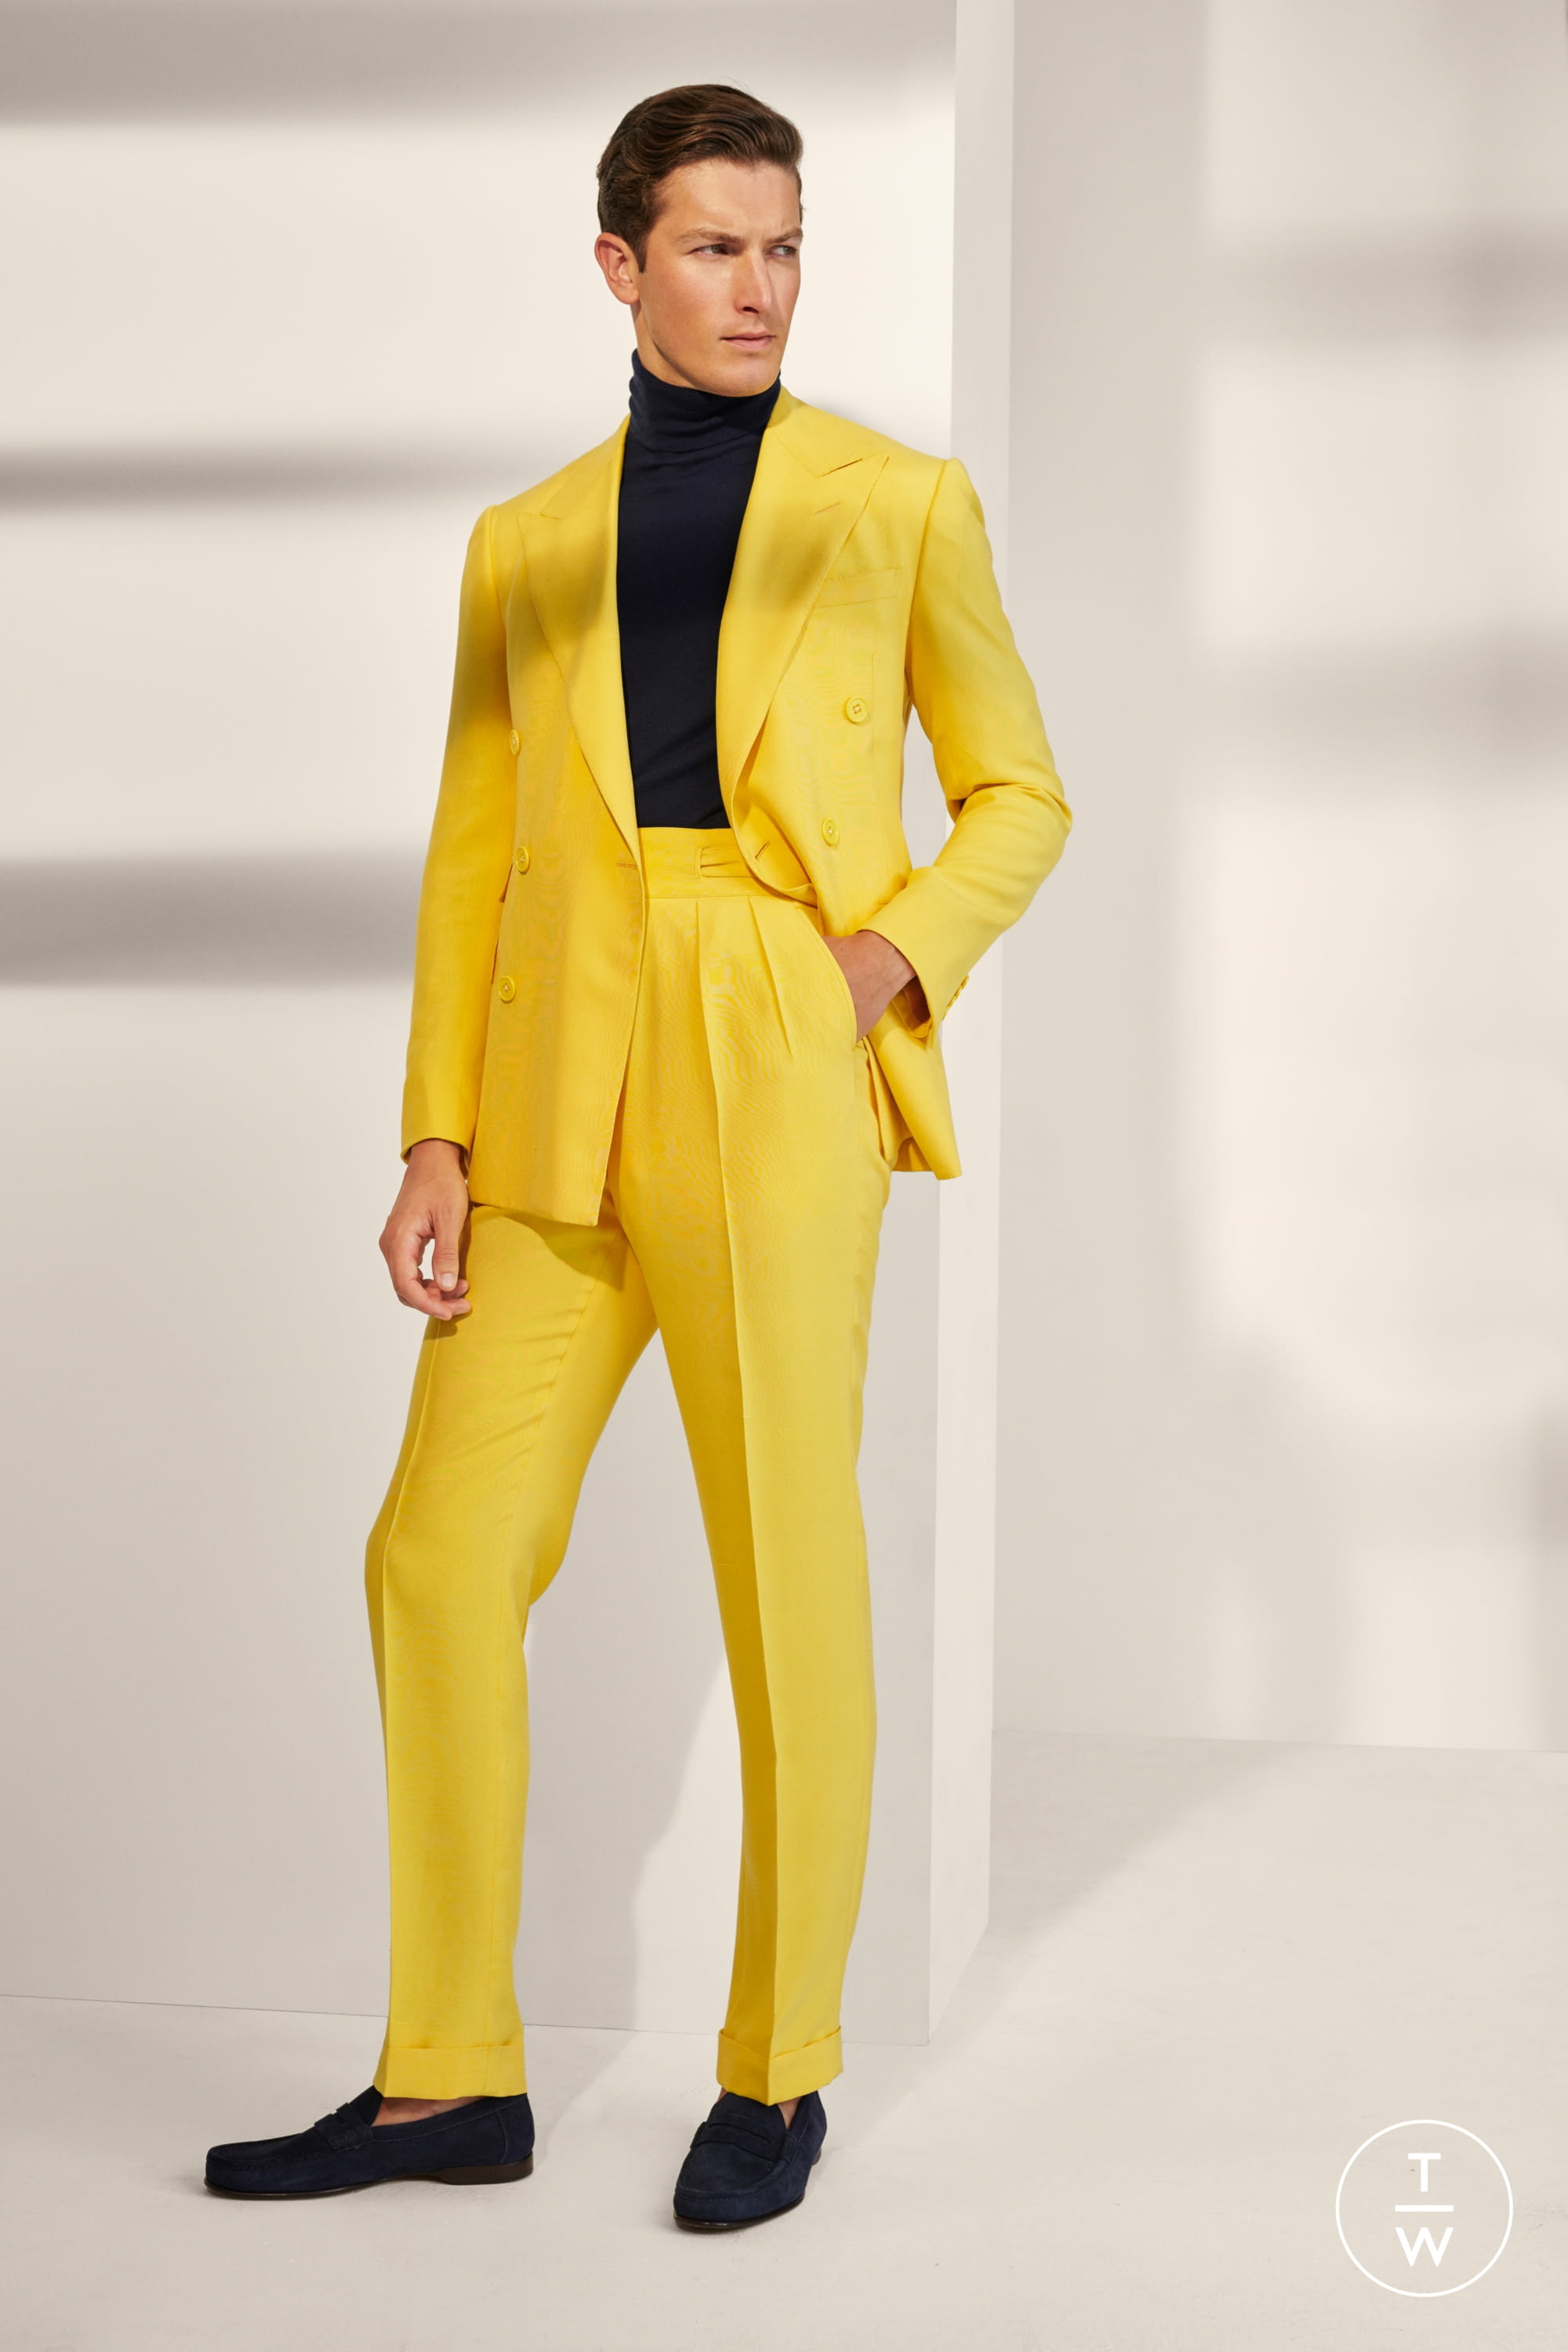 Brock Collection SS20 womenswear #26 - Tagwalk: The Fashion Search